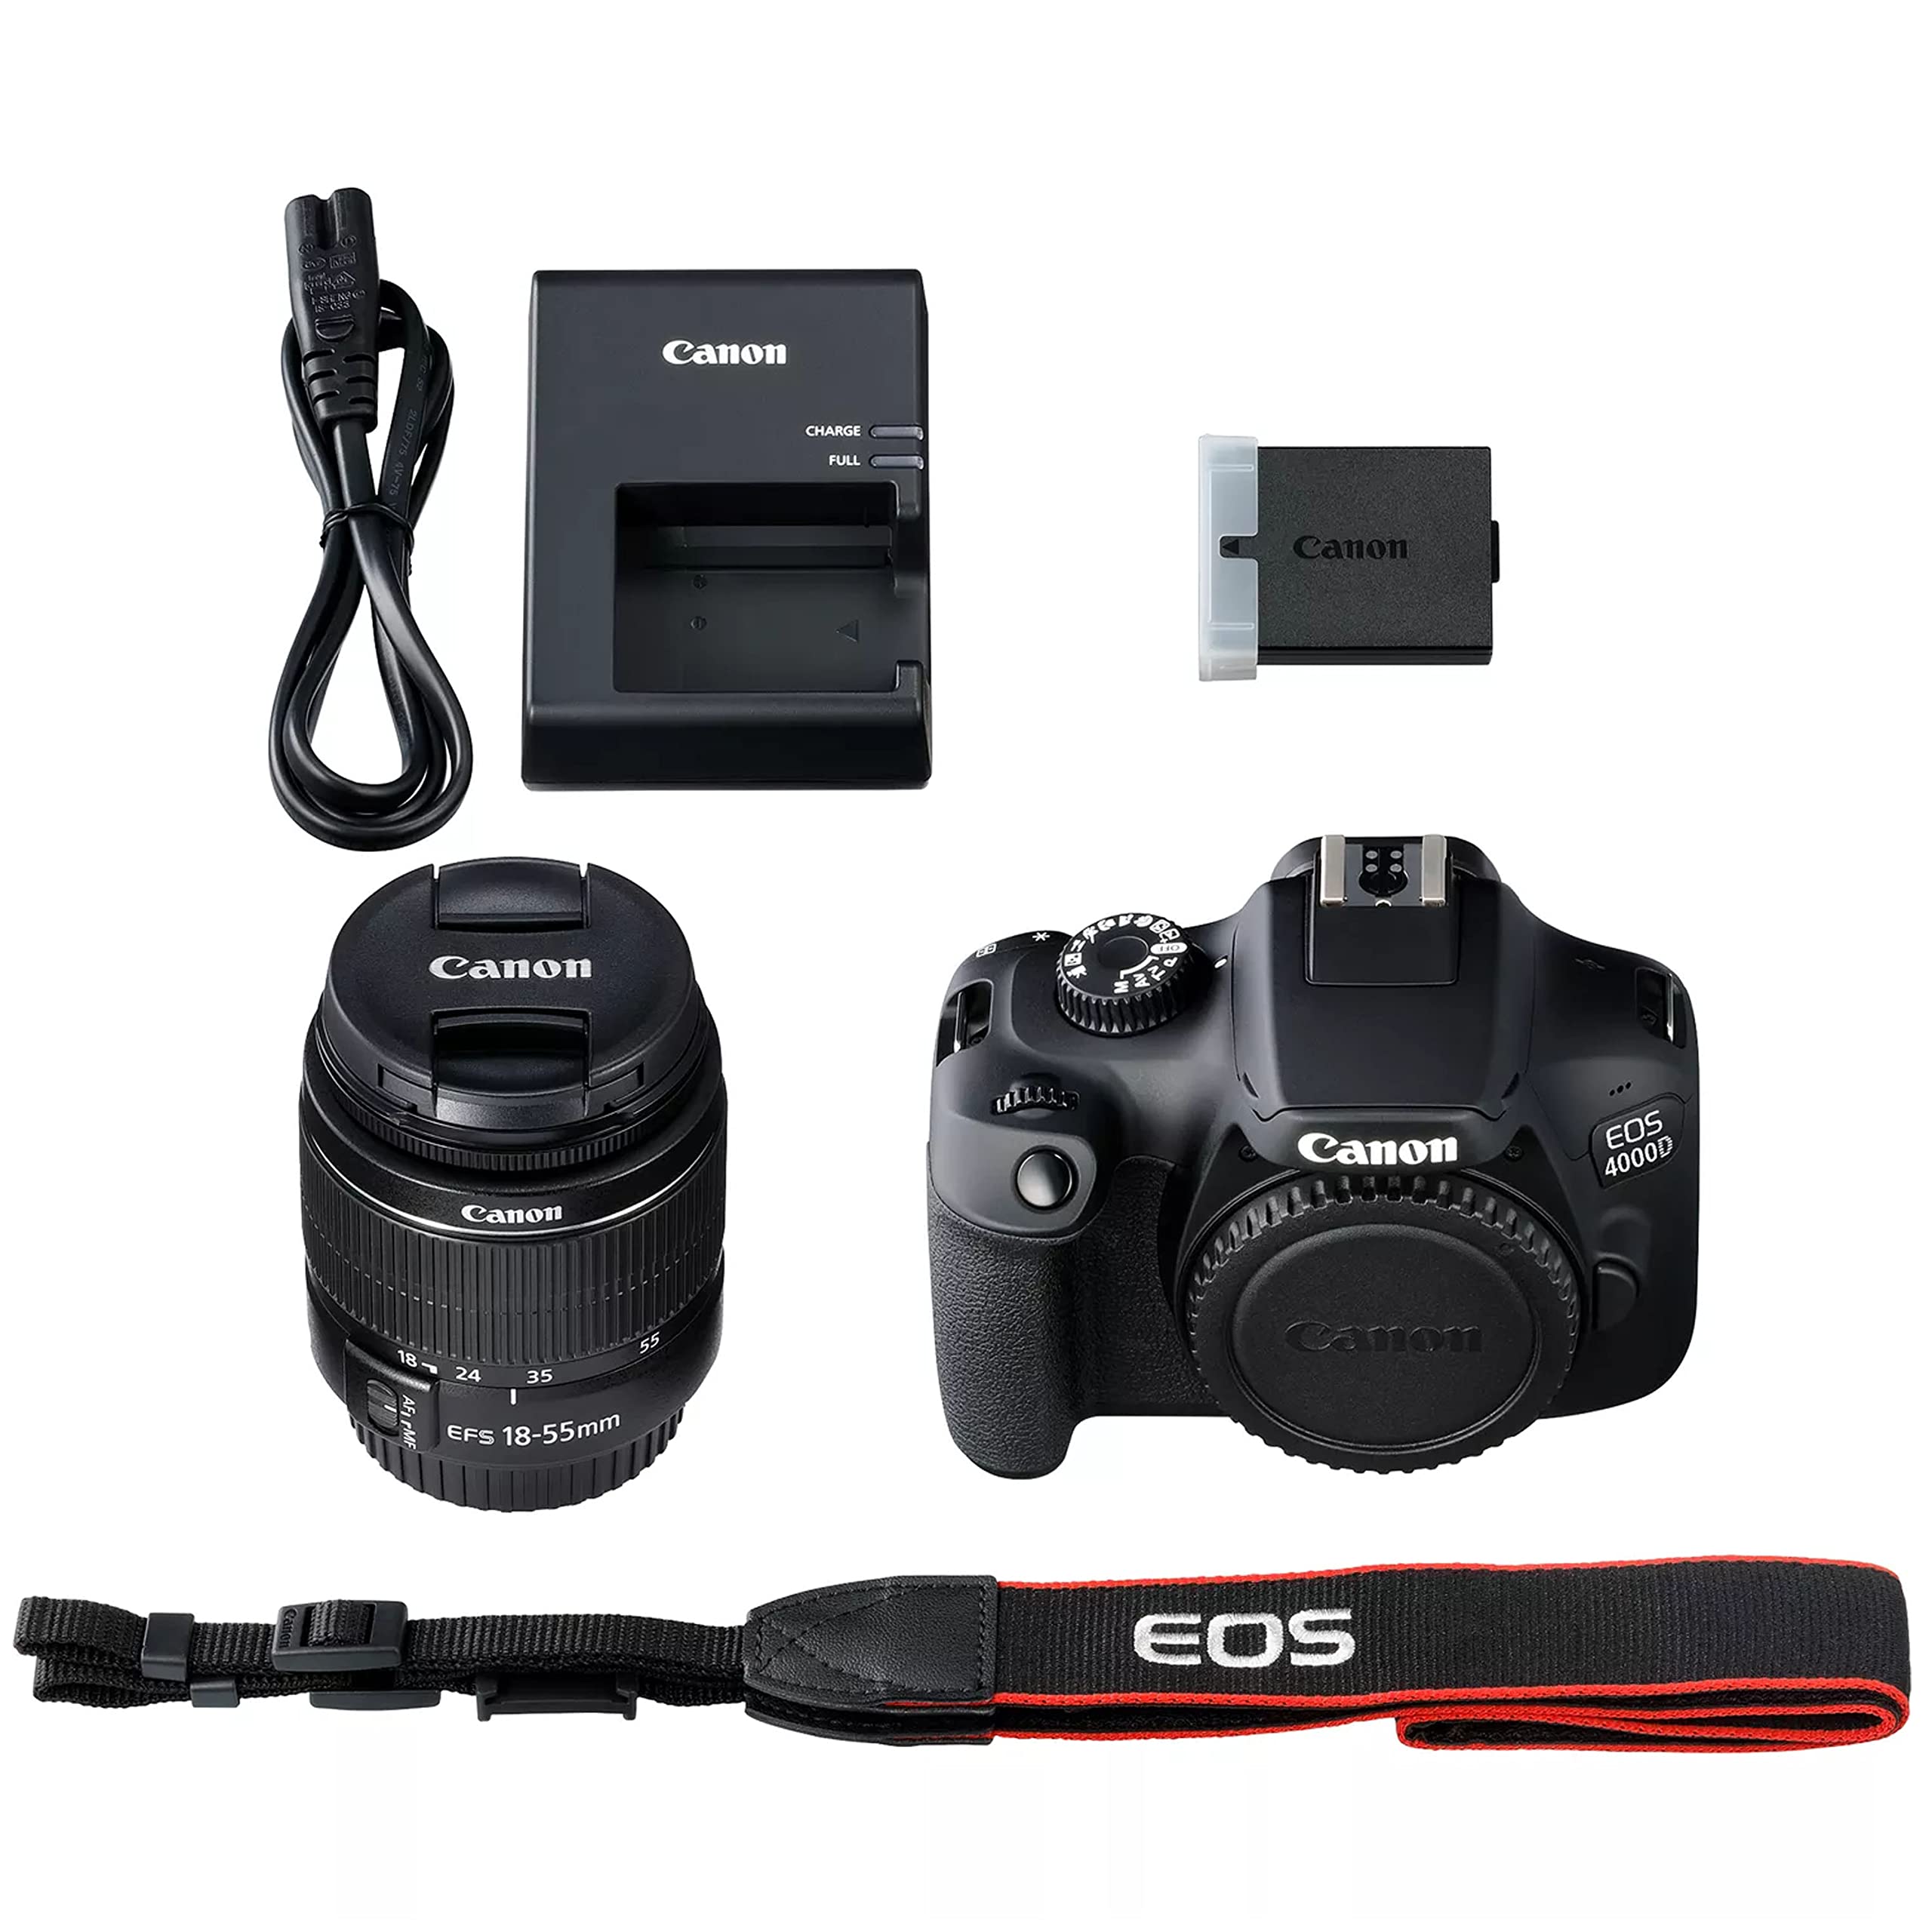 EOS 4000D DSLR (Rebel T100) W/ 18-55mm Zoon Lens |18 Megapixels CMOS | Full HD Video +64GB Memory, Wide Angle + Telephoto Lens, Filters, Case, Tripod + More (28PC Bundle Kit)